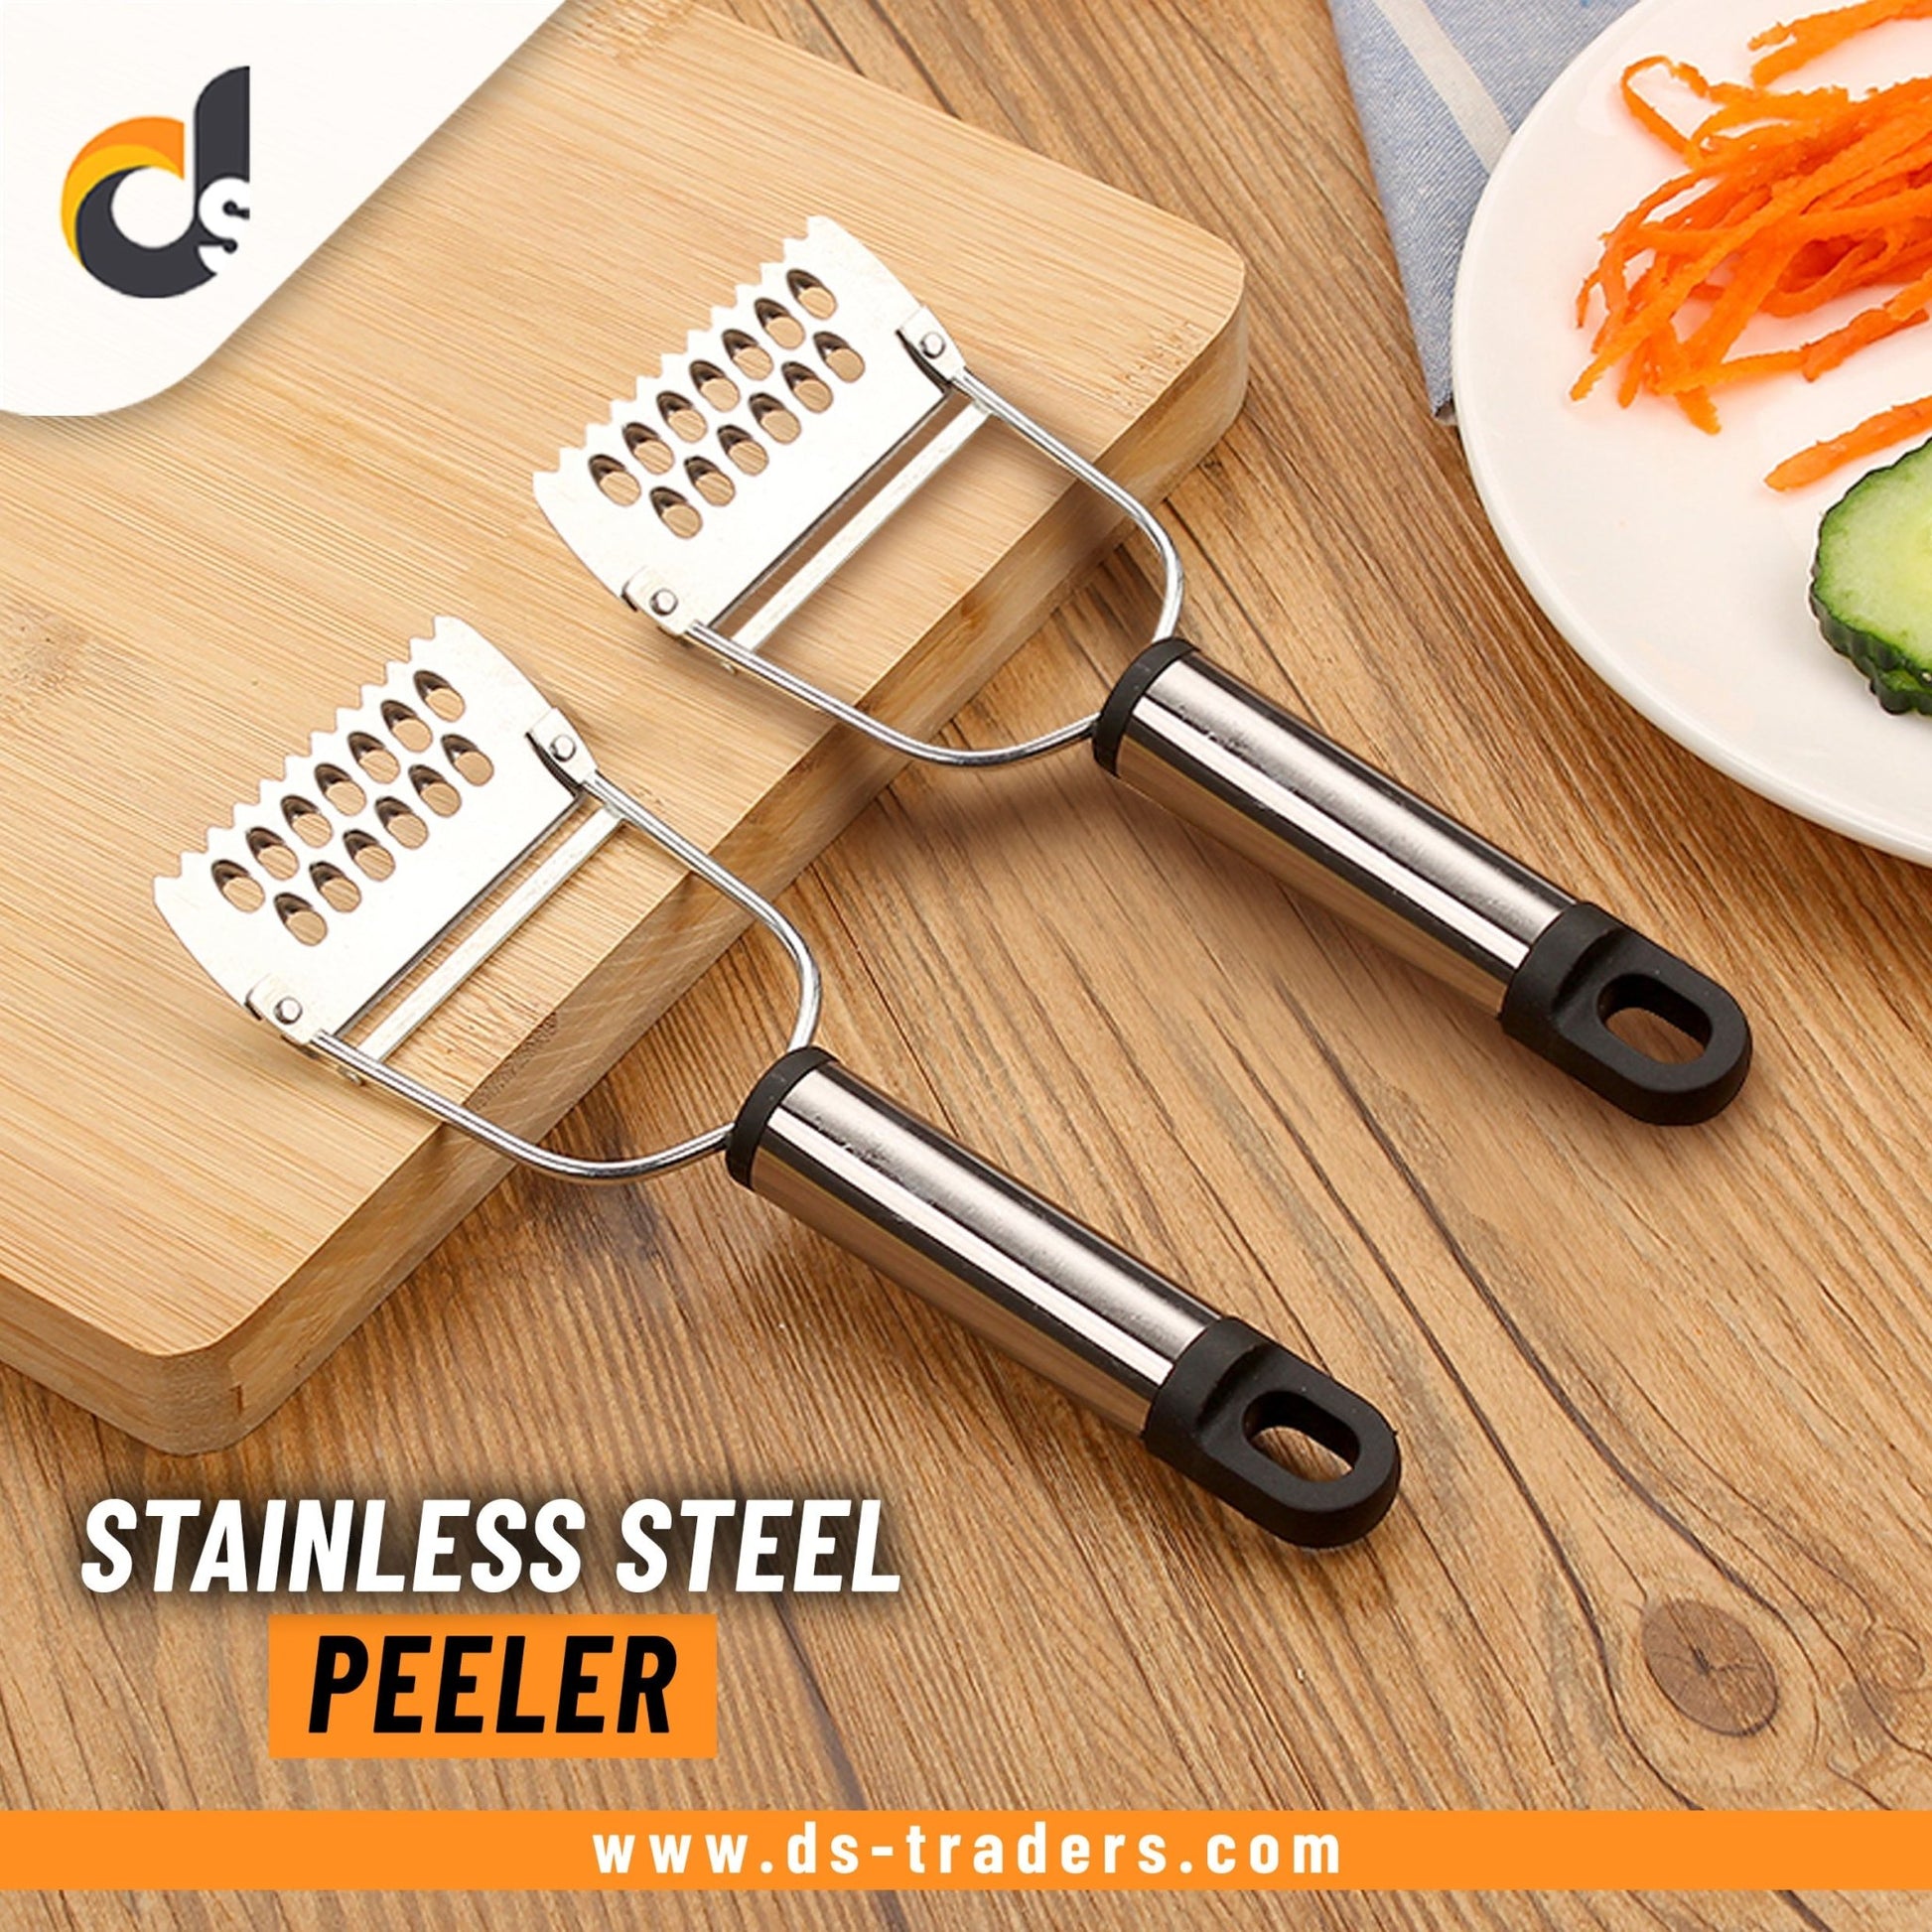 Multifunctional Stainless Steel Peeler - DS Traders